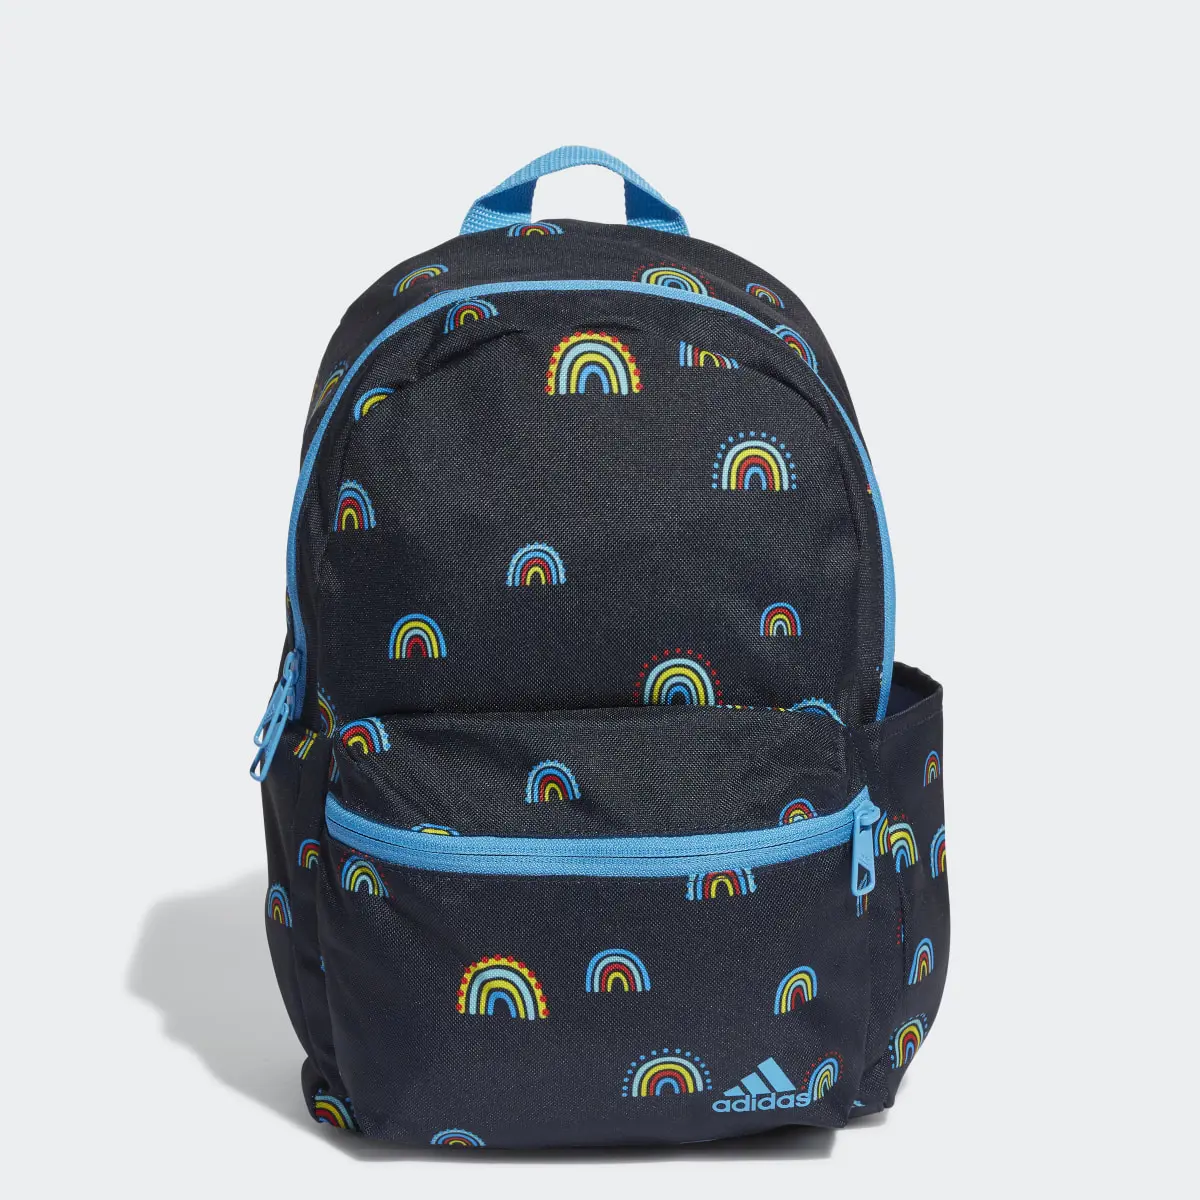 Adidas Rainbow Backpack. 1